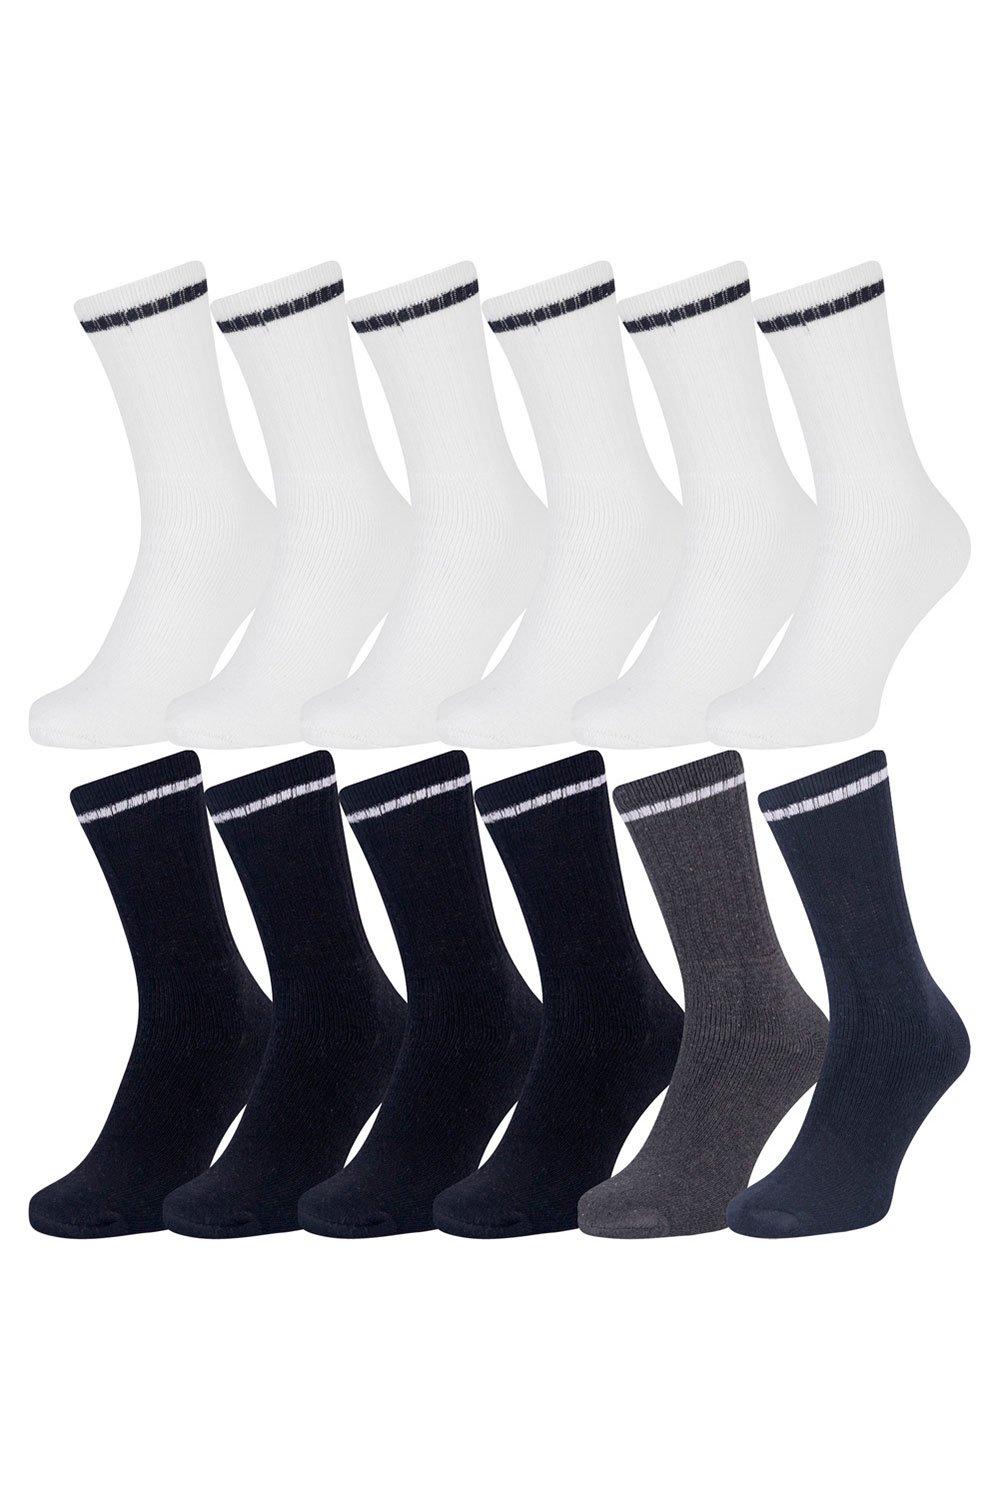 Classic Sports Socks (12 Pairs)